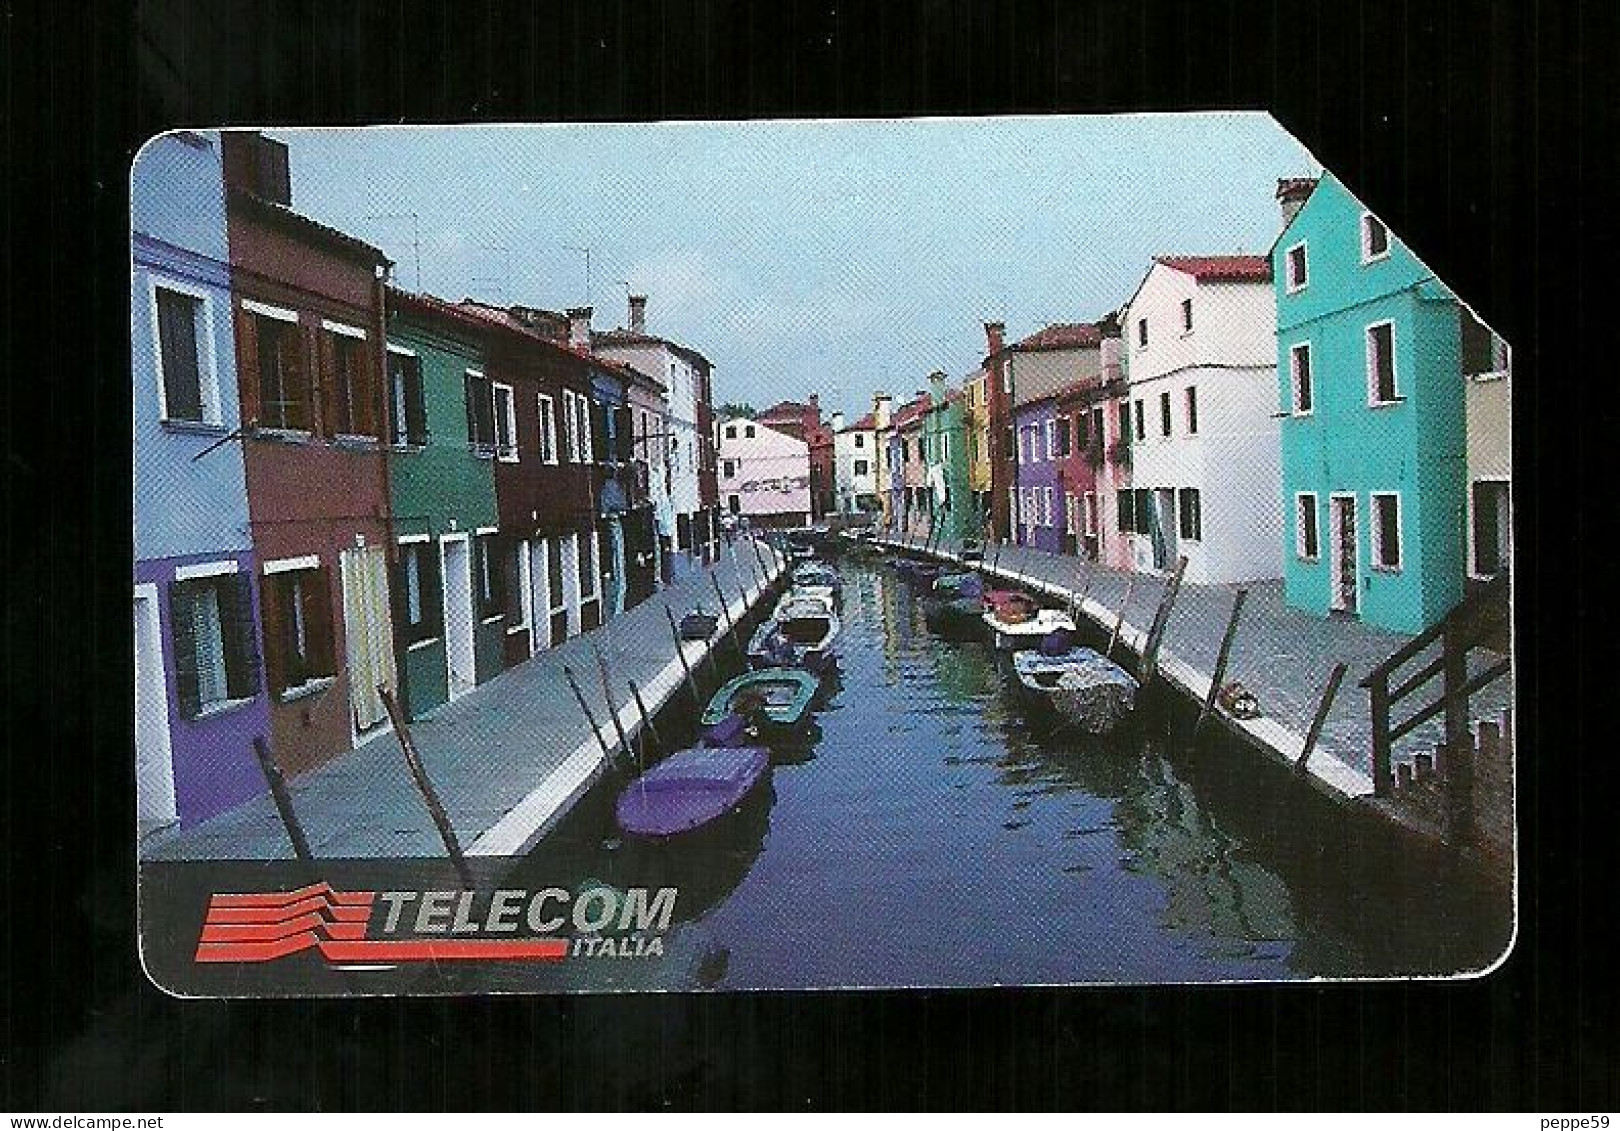 738 Golden - Linee D'italia - Veneto Da Lire 10.000 Telecom - Public Advertising